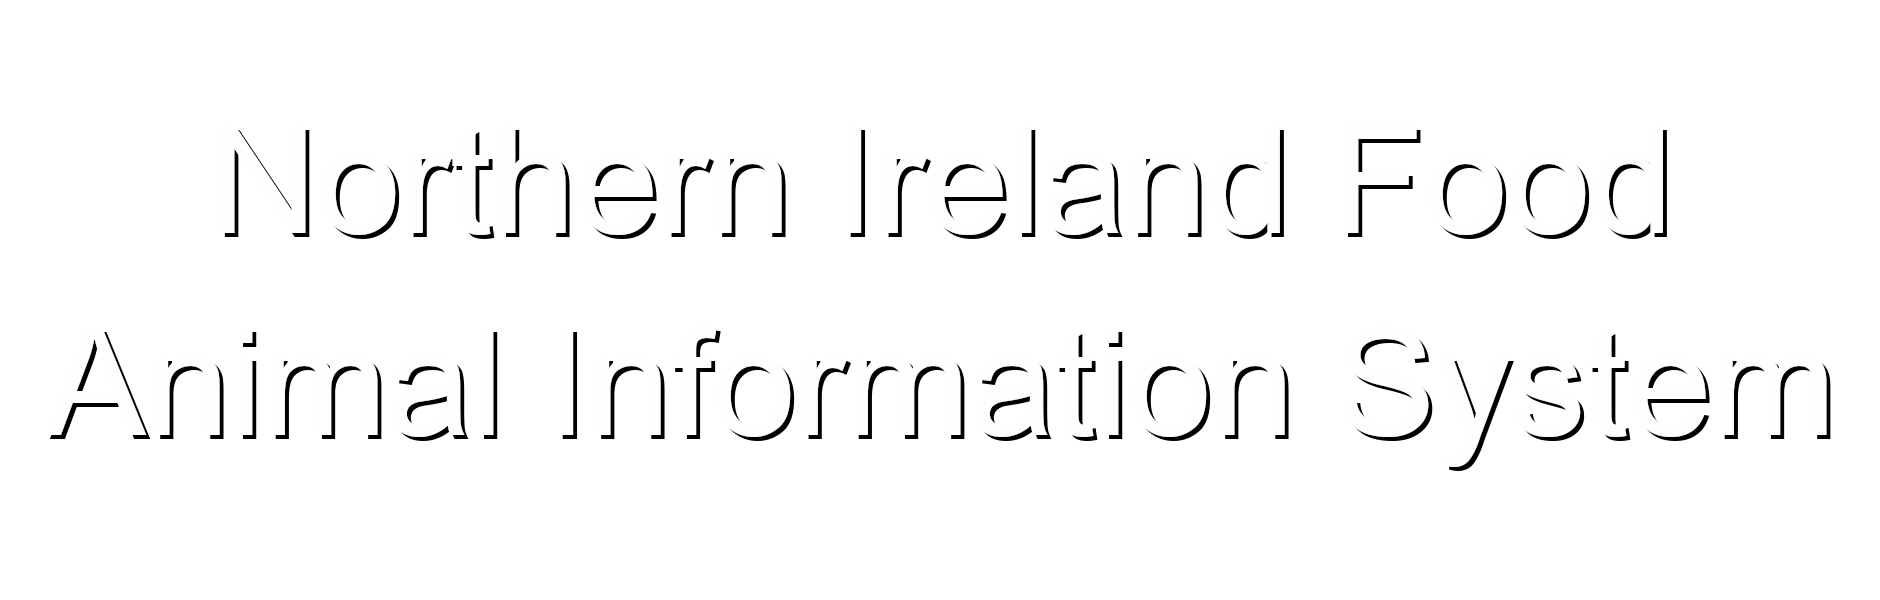 Northern Ireland Food Animal Information System